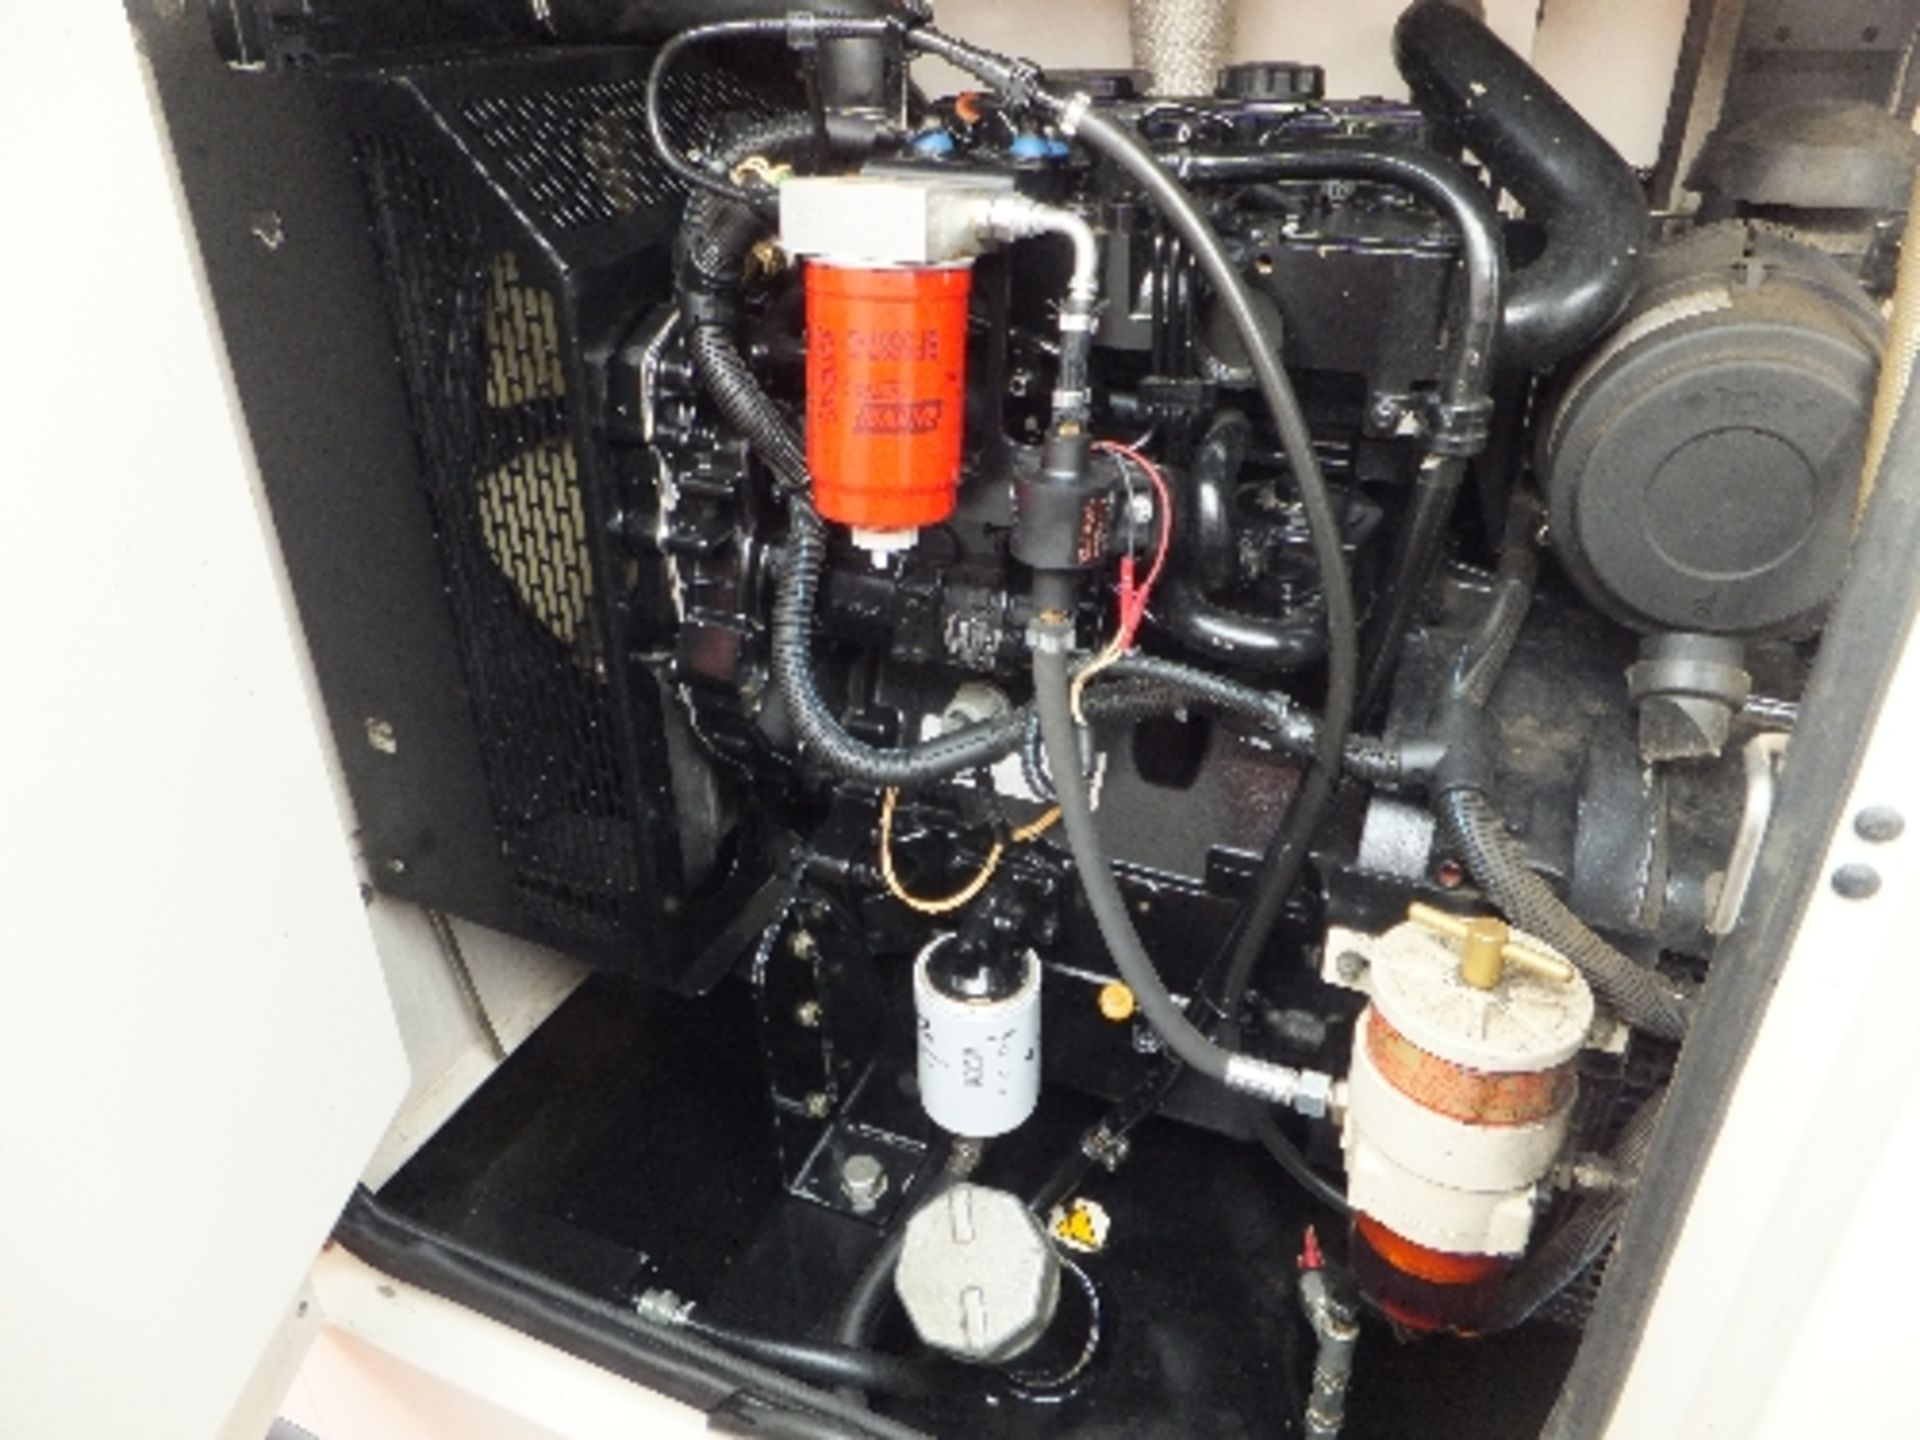 Wilson Perkins 45kva generator RMP 42,658 hours HF3757 - Image 2 of 6